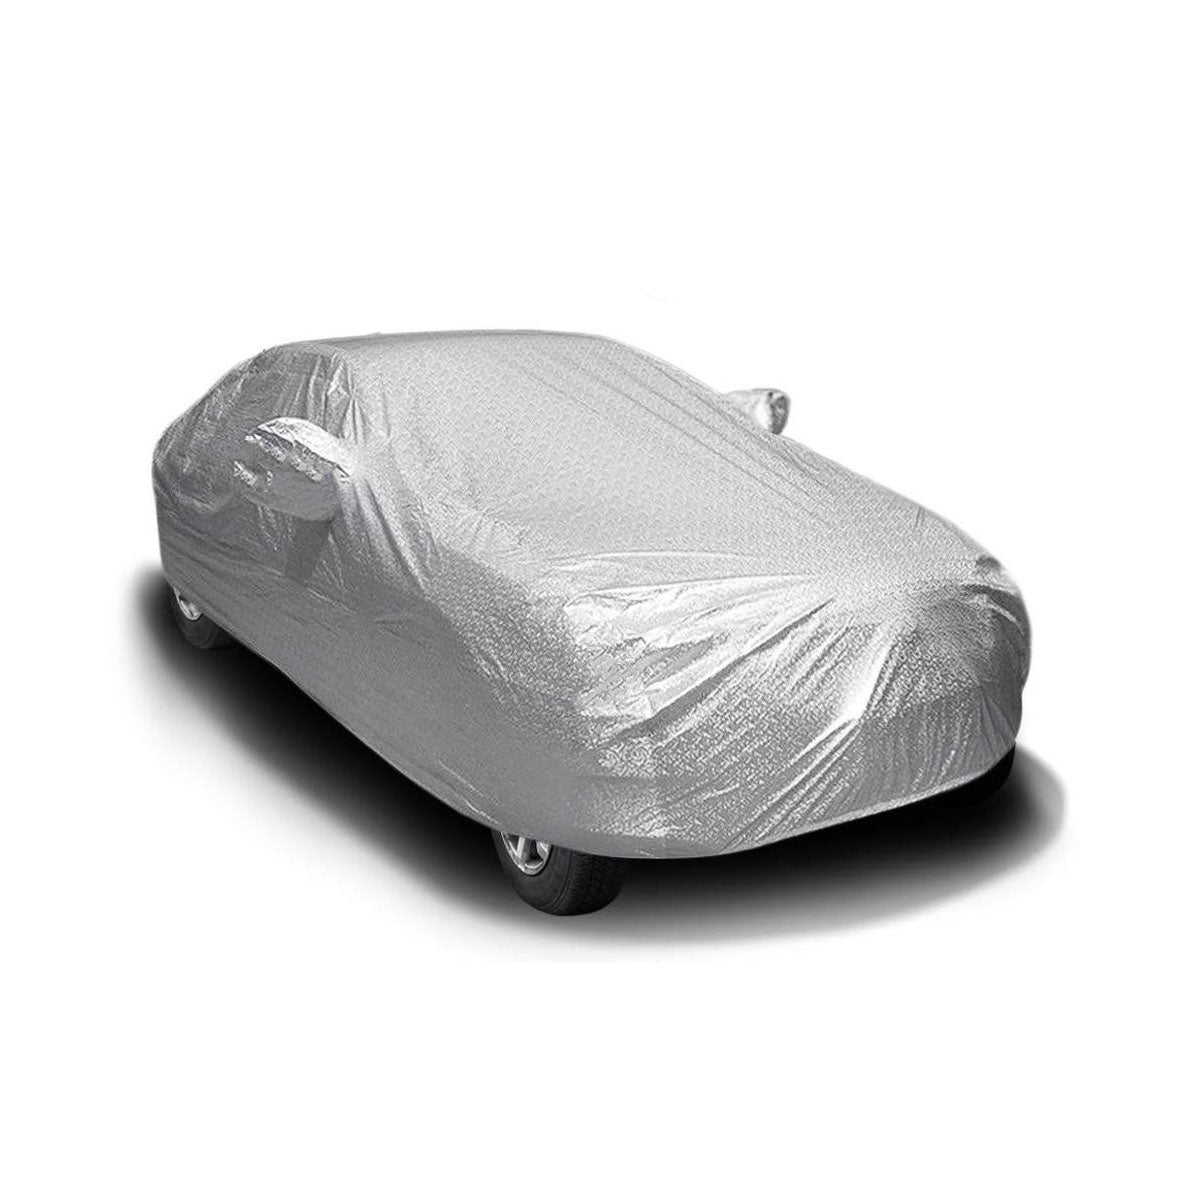 Oshotto Spyro Silver Anti Reflective, dustproof and Water Proof Car Body Cover with Mirror Pockets For Maruti Suzuki Grand Vitara 2022 Onwards